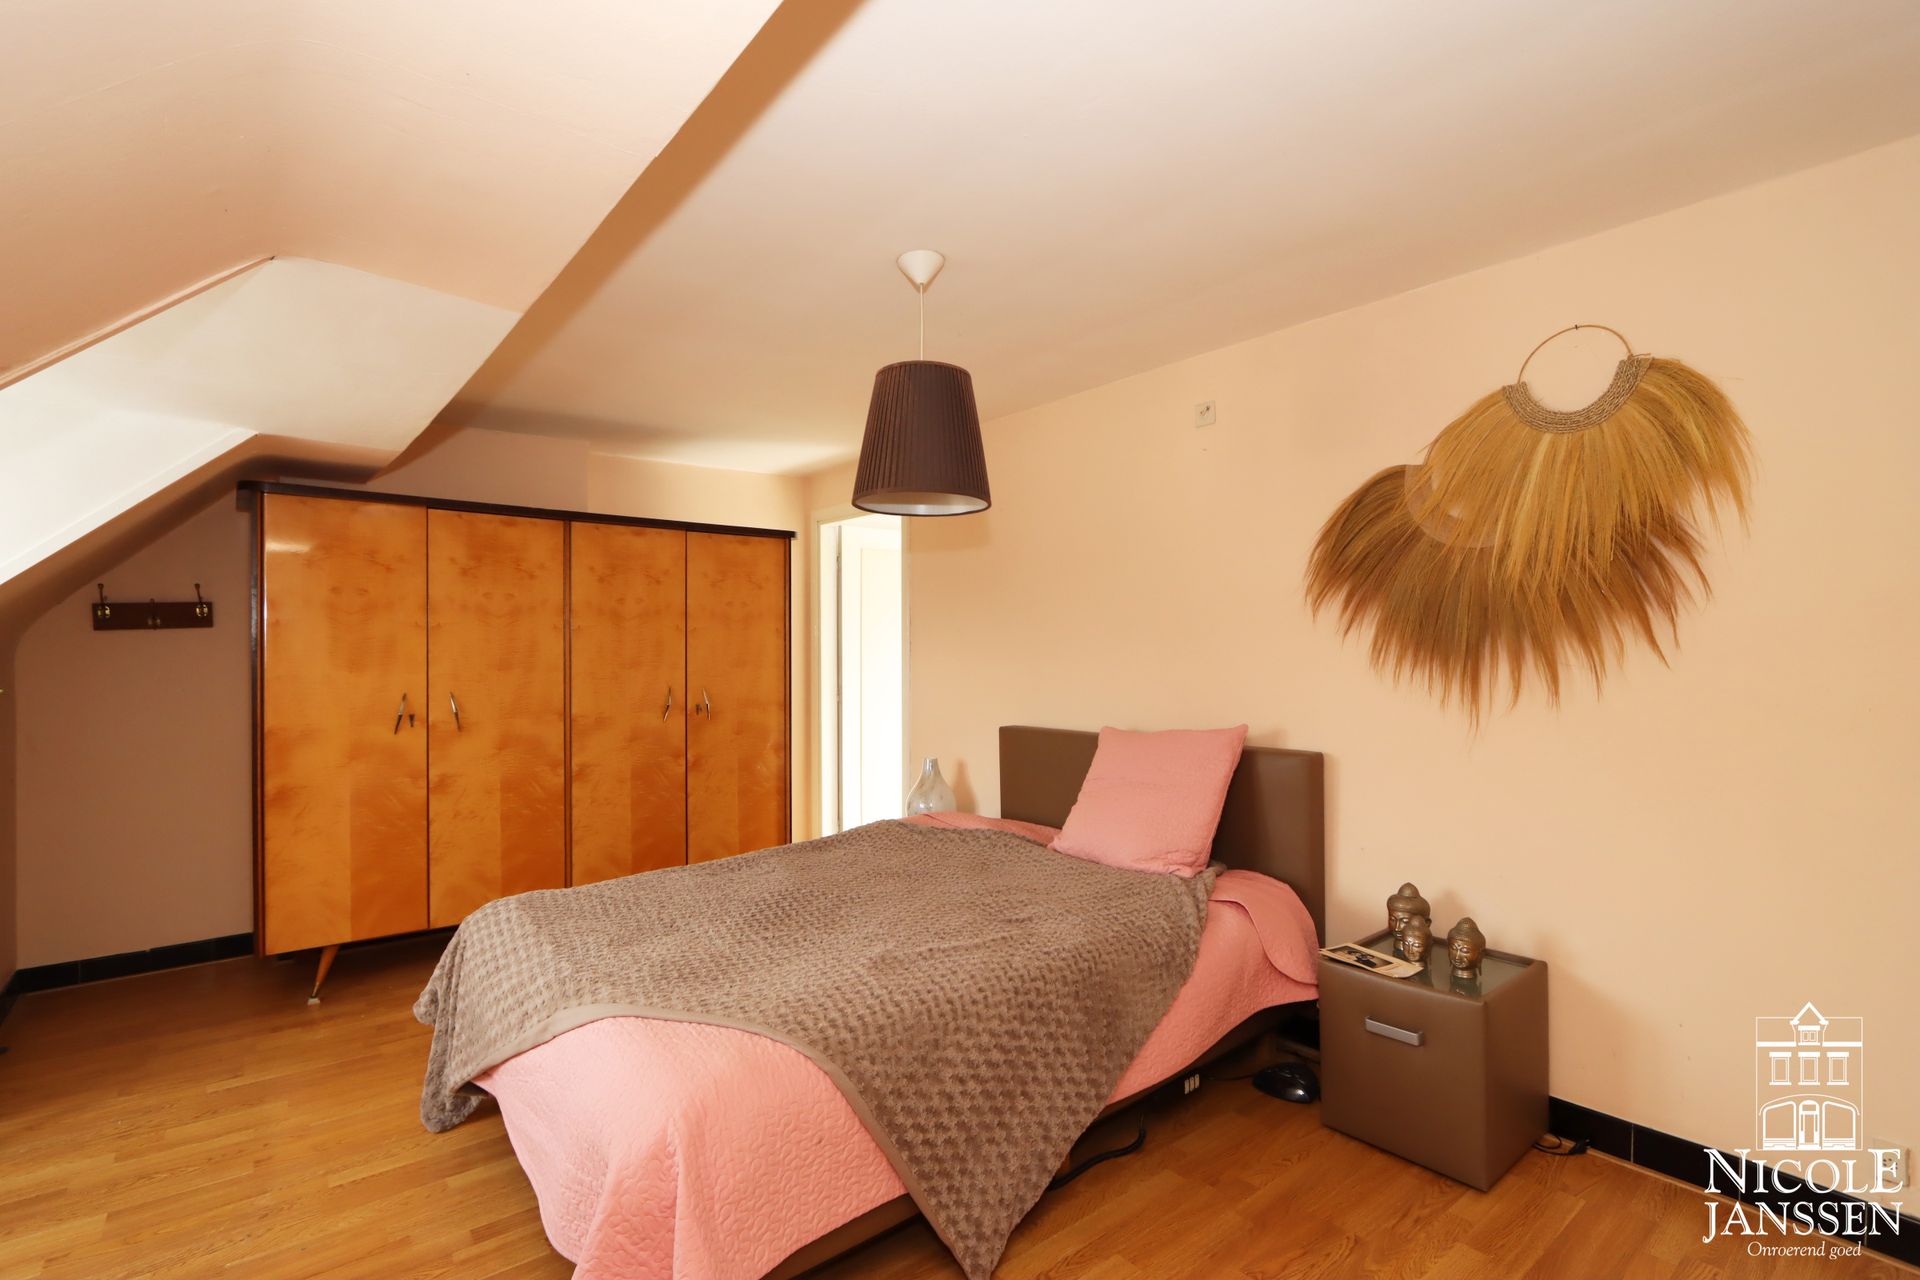 Nicole Janssen - huis te koop - Kantonsweg 59 te Rotem - slaapkamer3.jpg